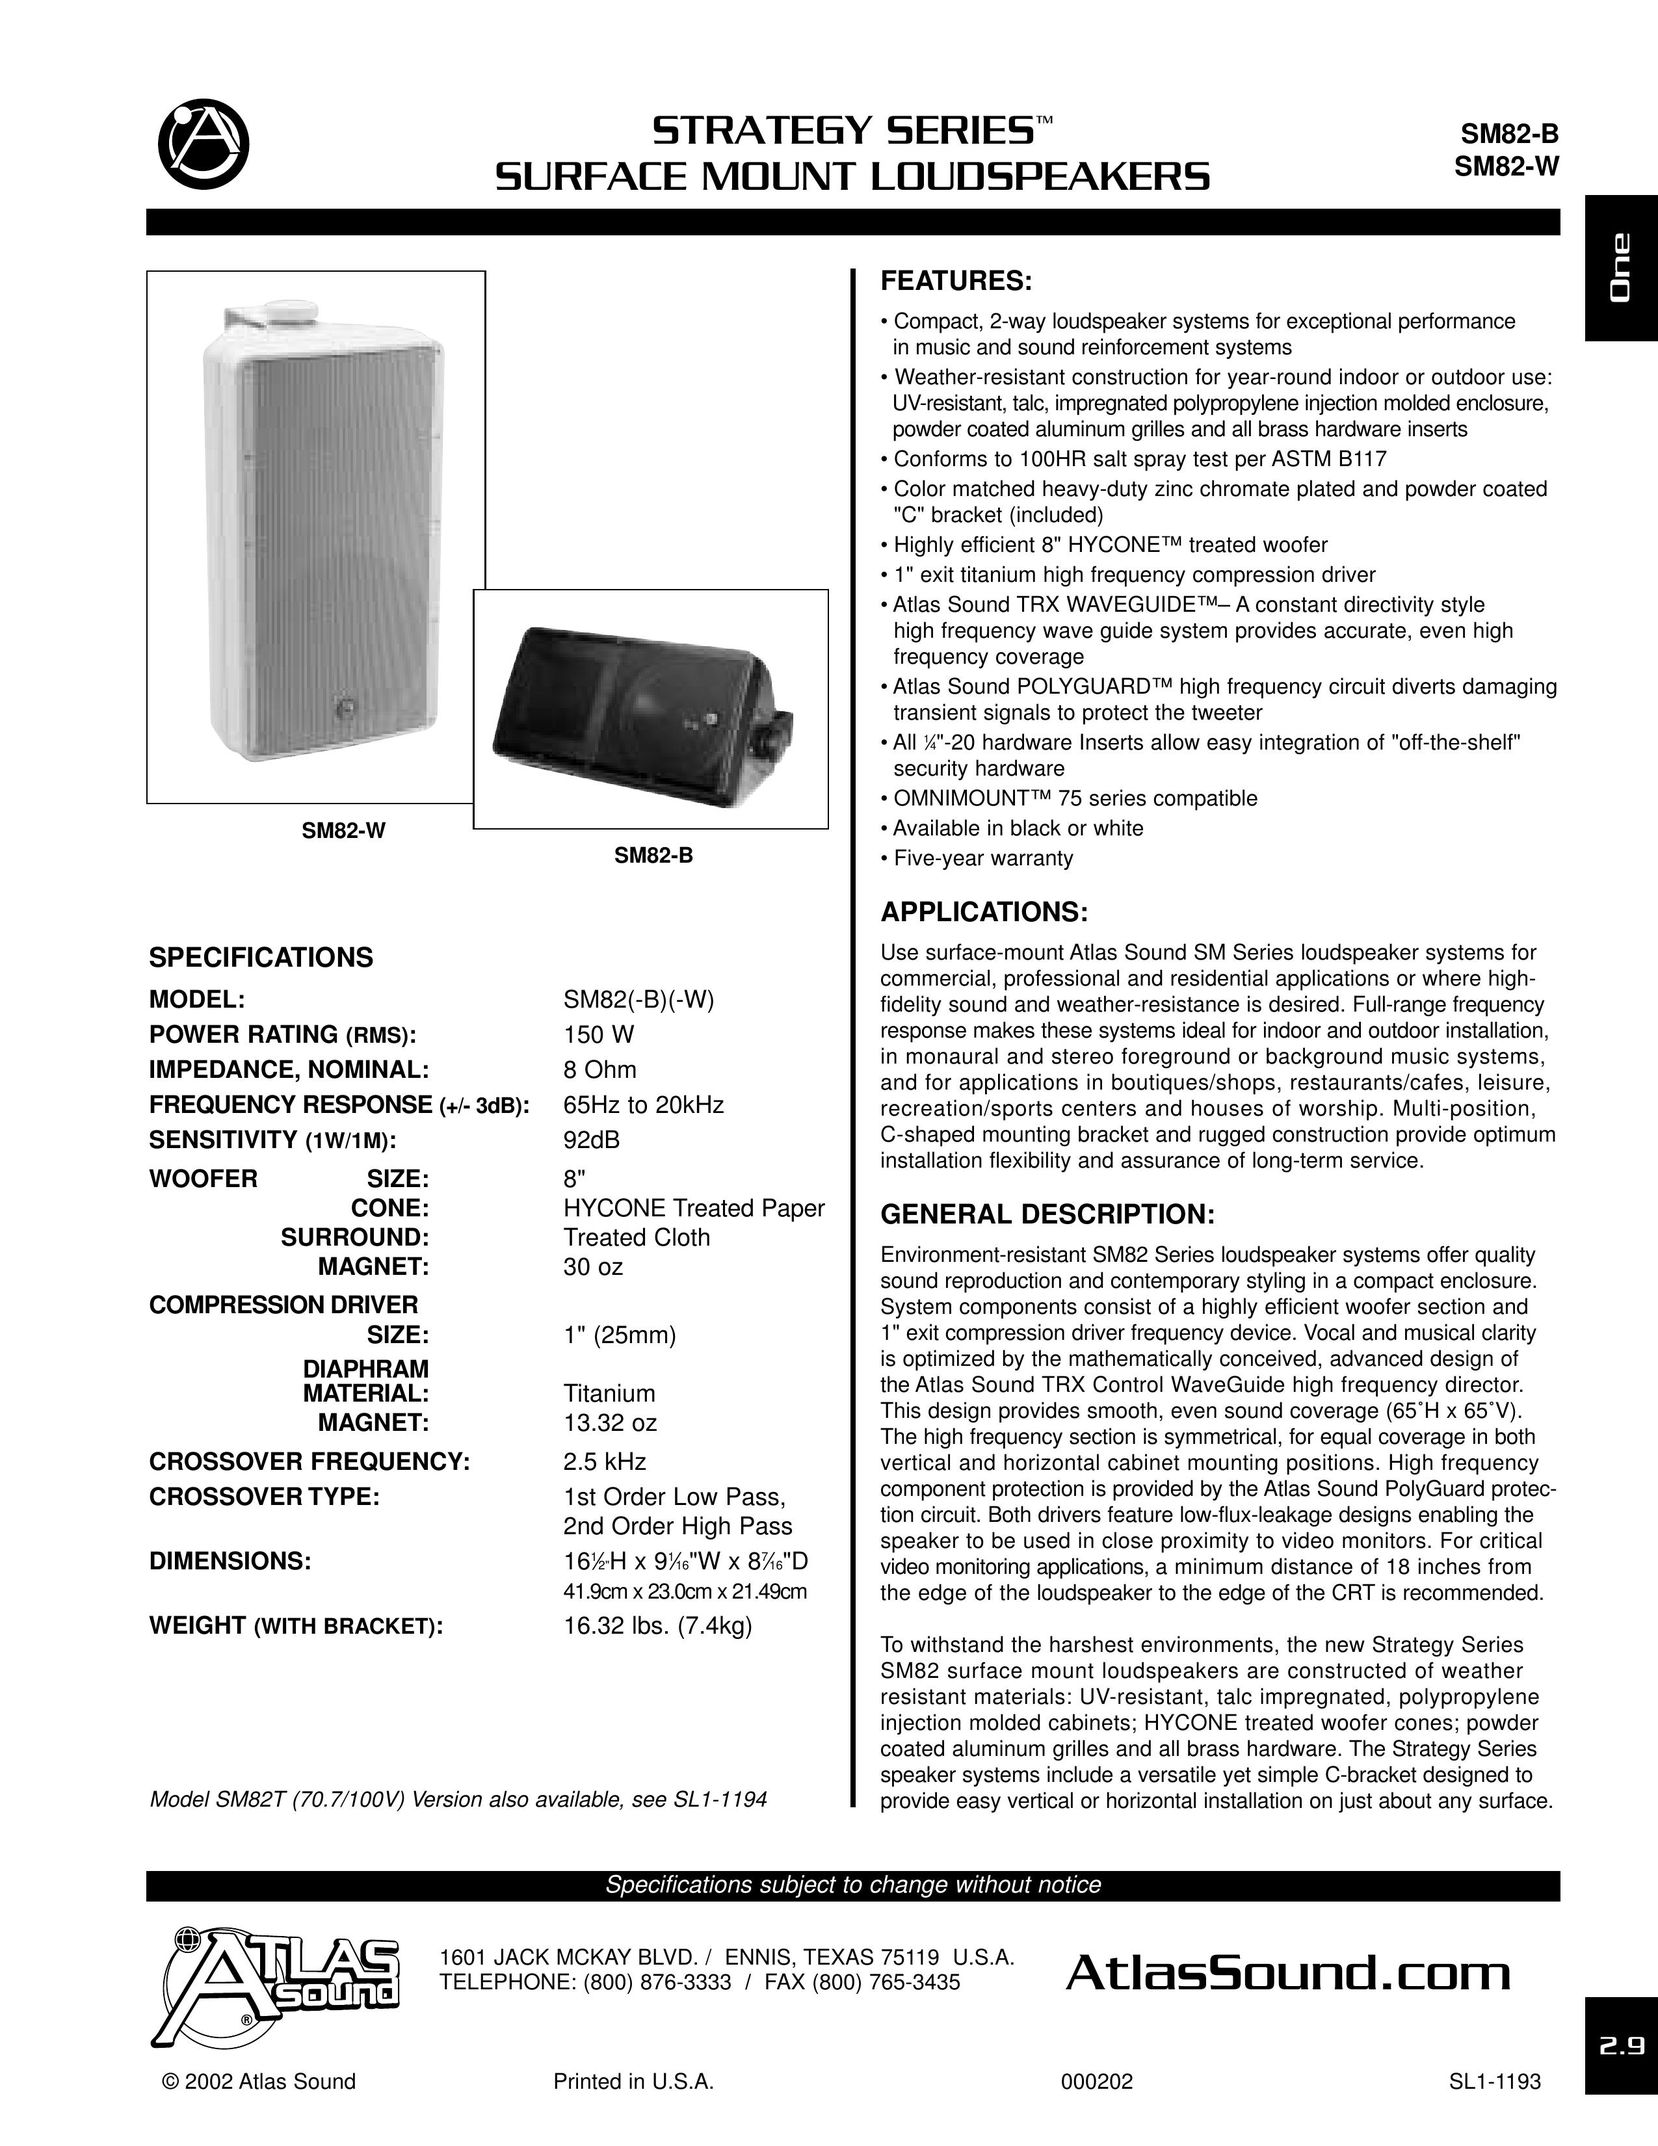 Atlas Sound SM82-W Portable Speaker User Manual